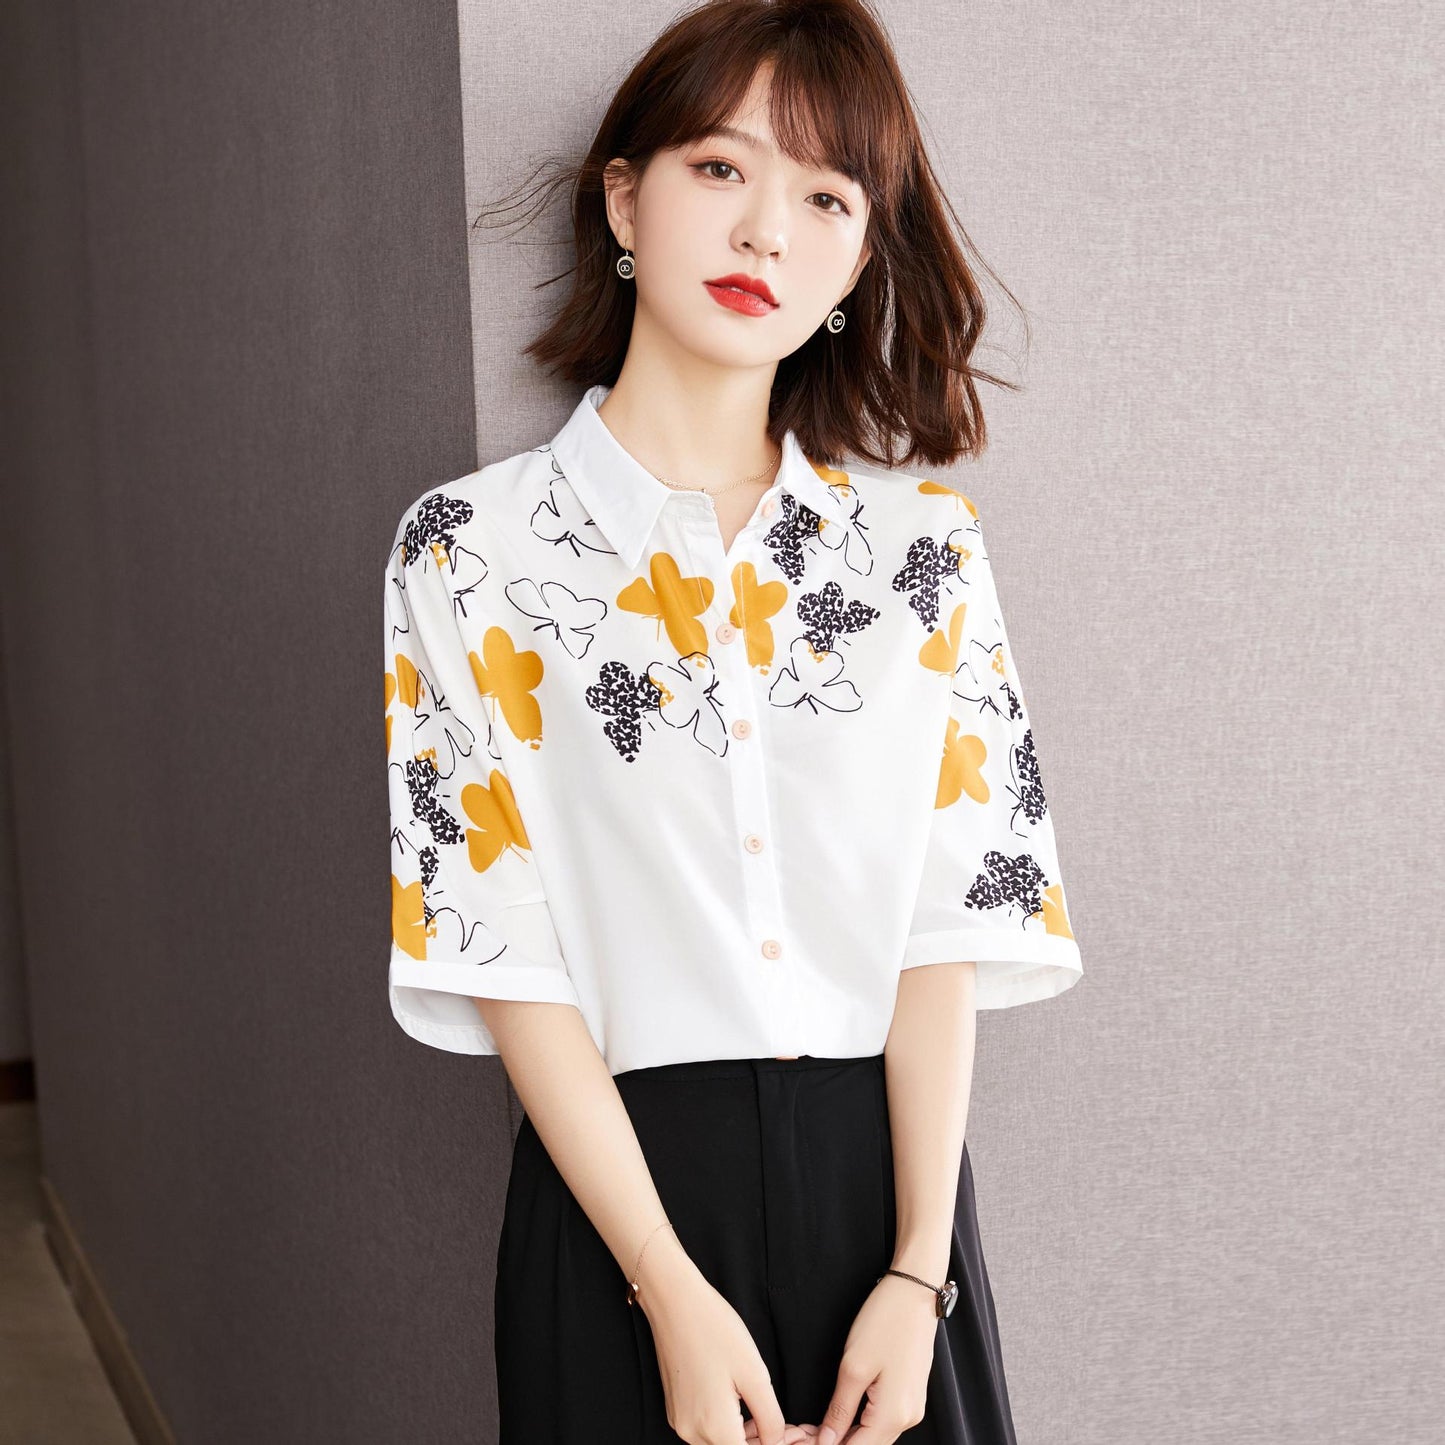 Women's Printed Top Short Sleeve Chiffon Shirt